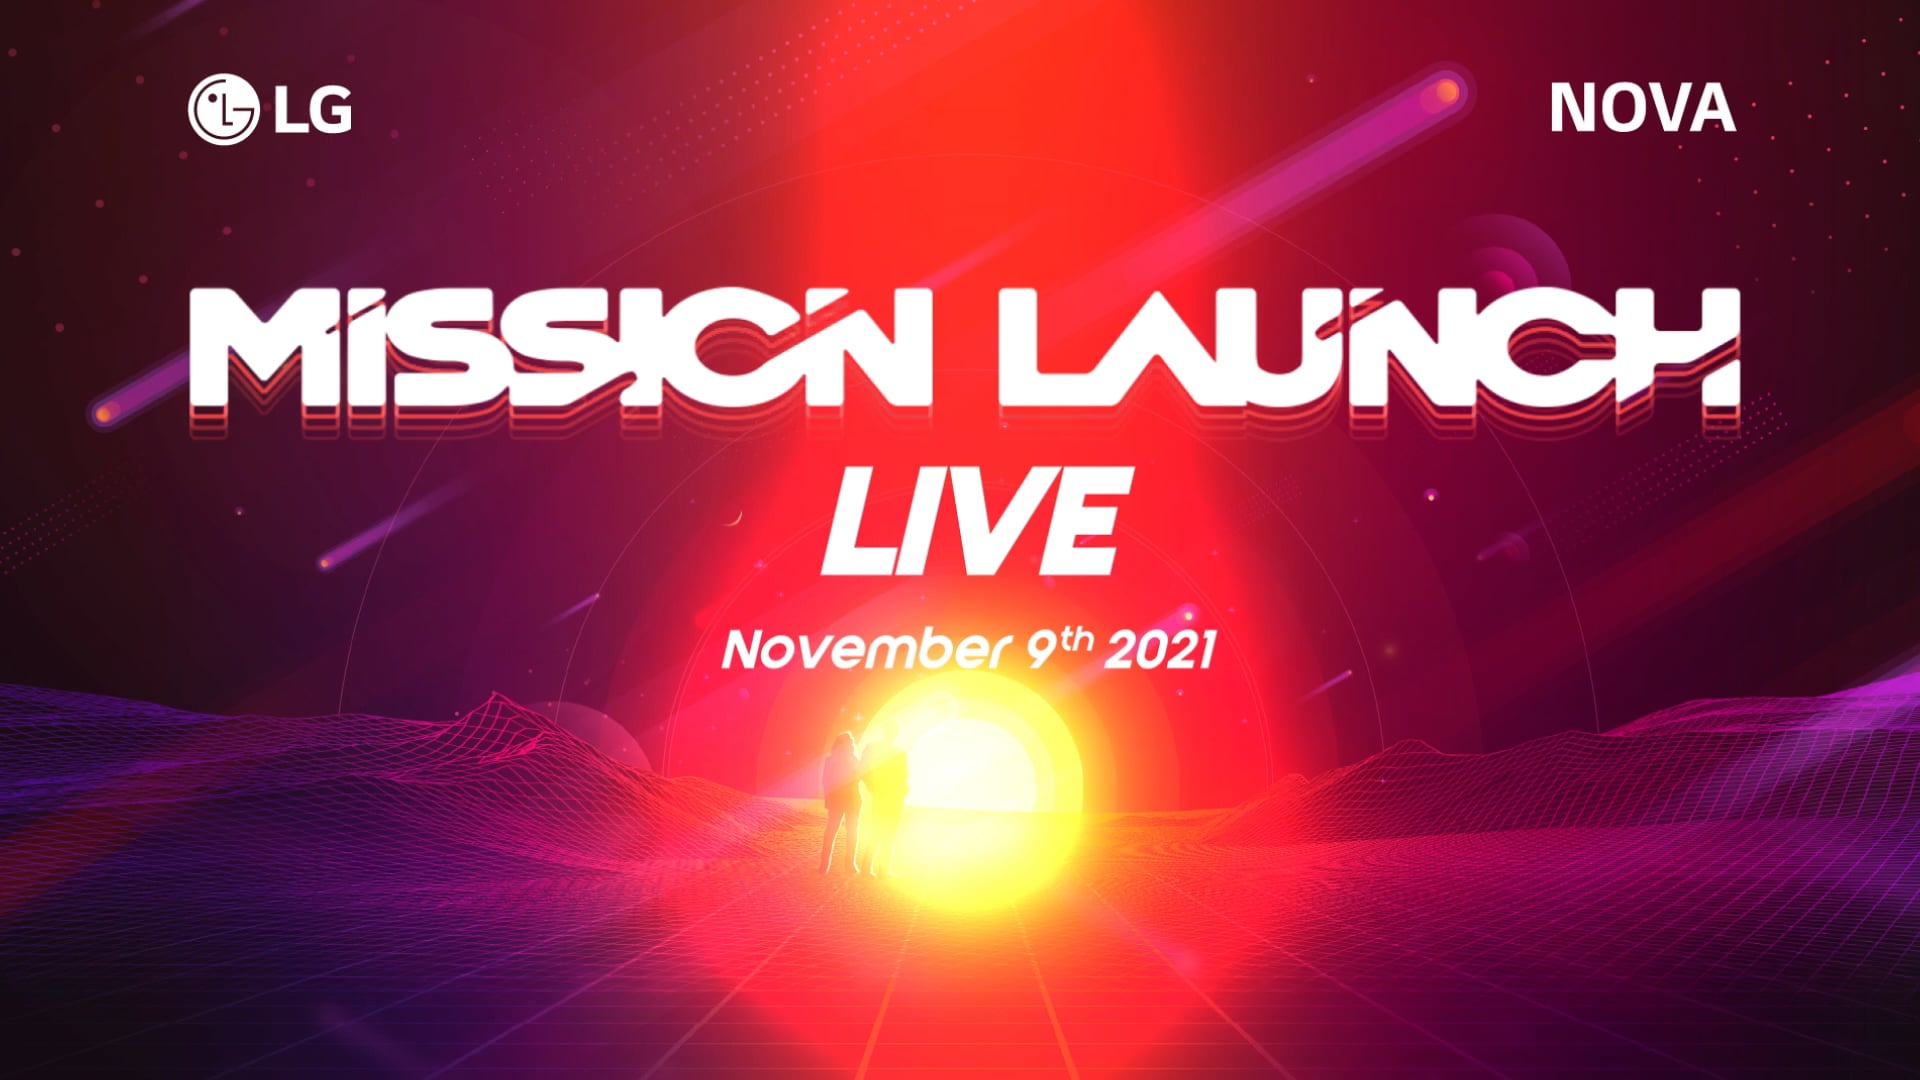 LG NOVA Mission Launch Live Sizzle